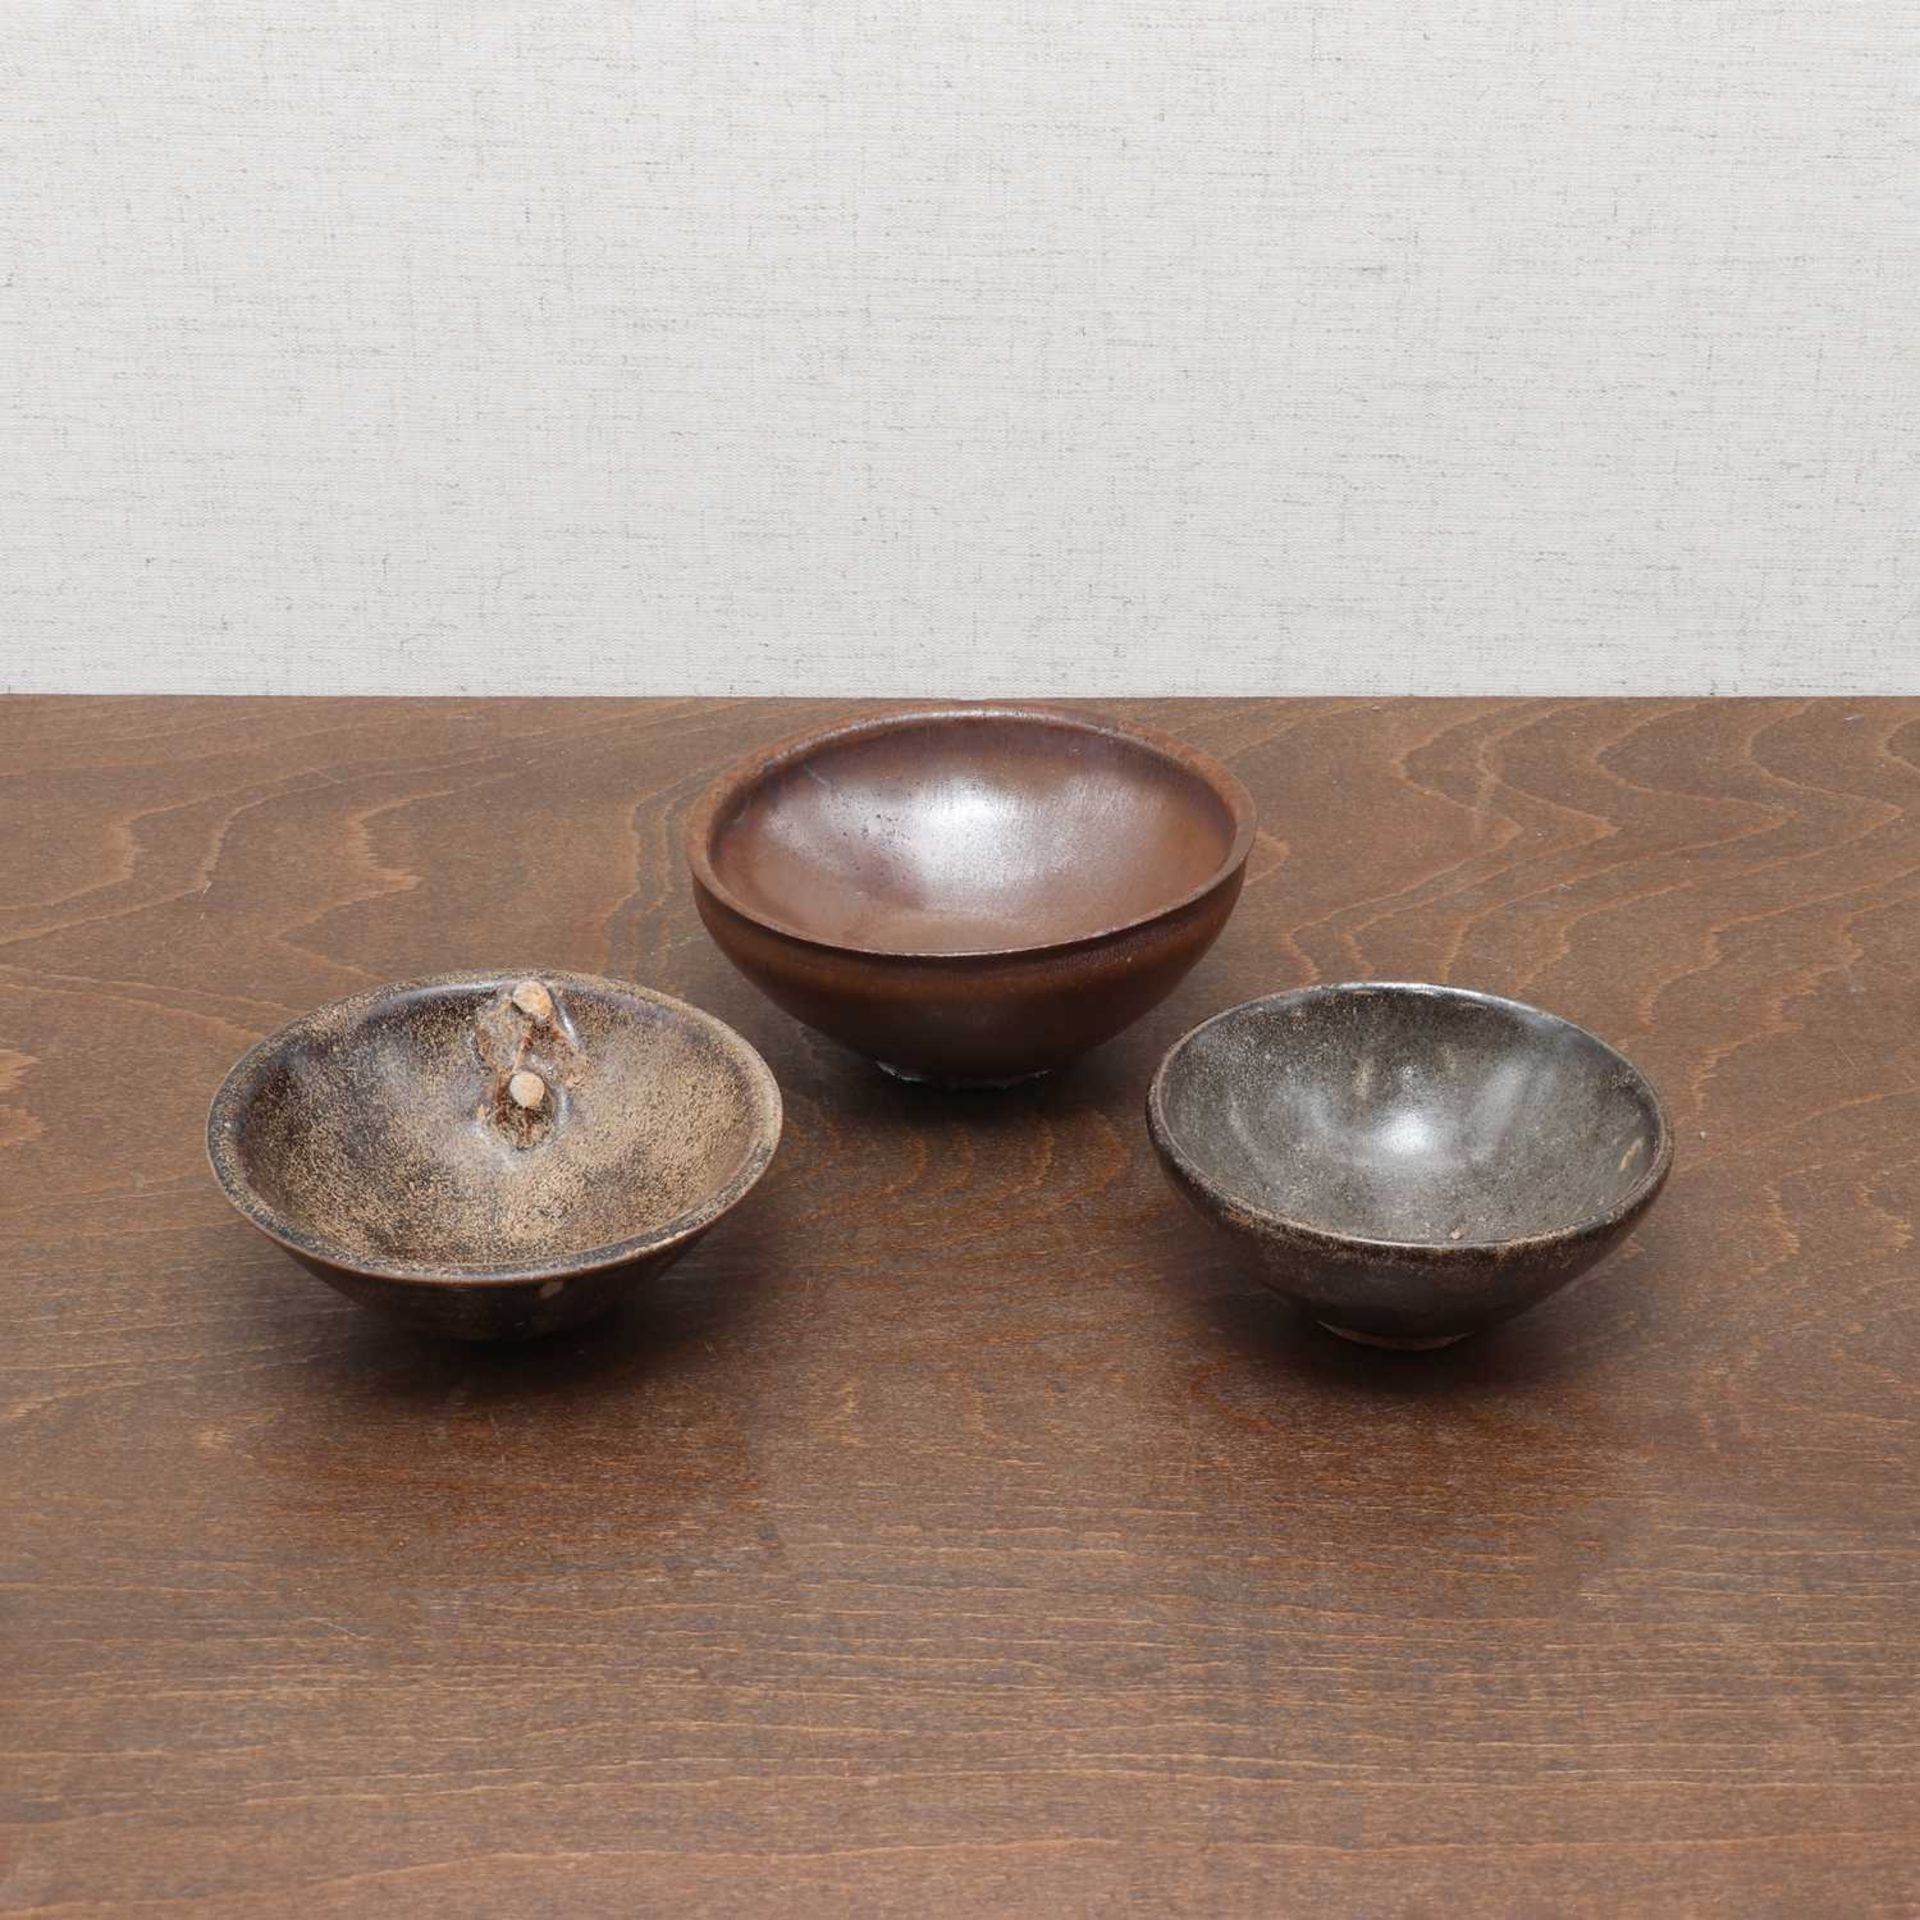 Two Chinese Jian ware tea bowls, - Image 4 of 5